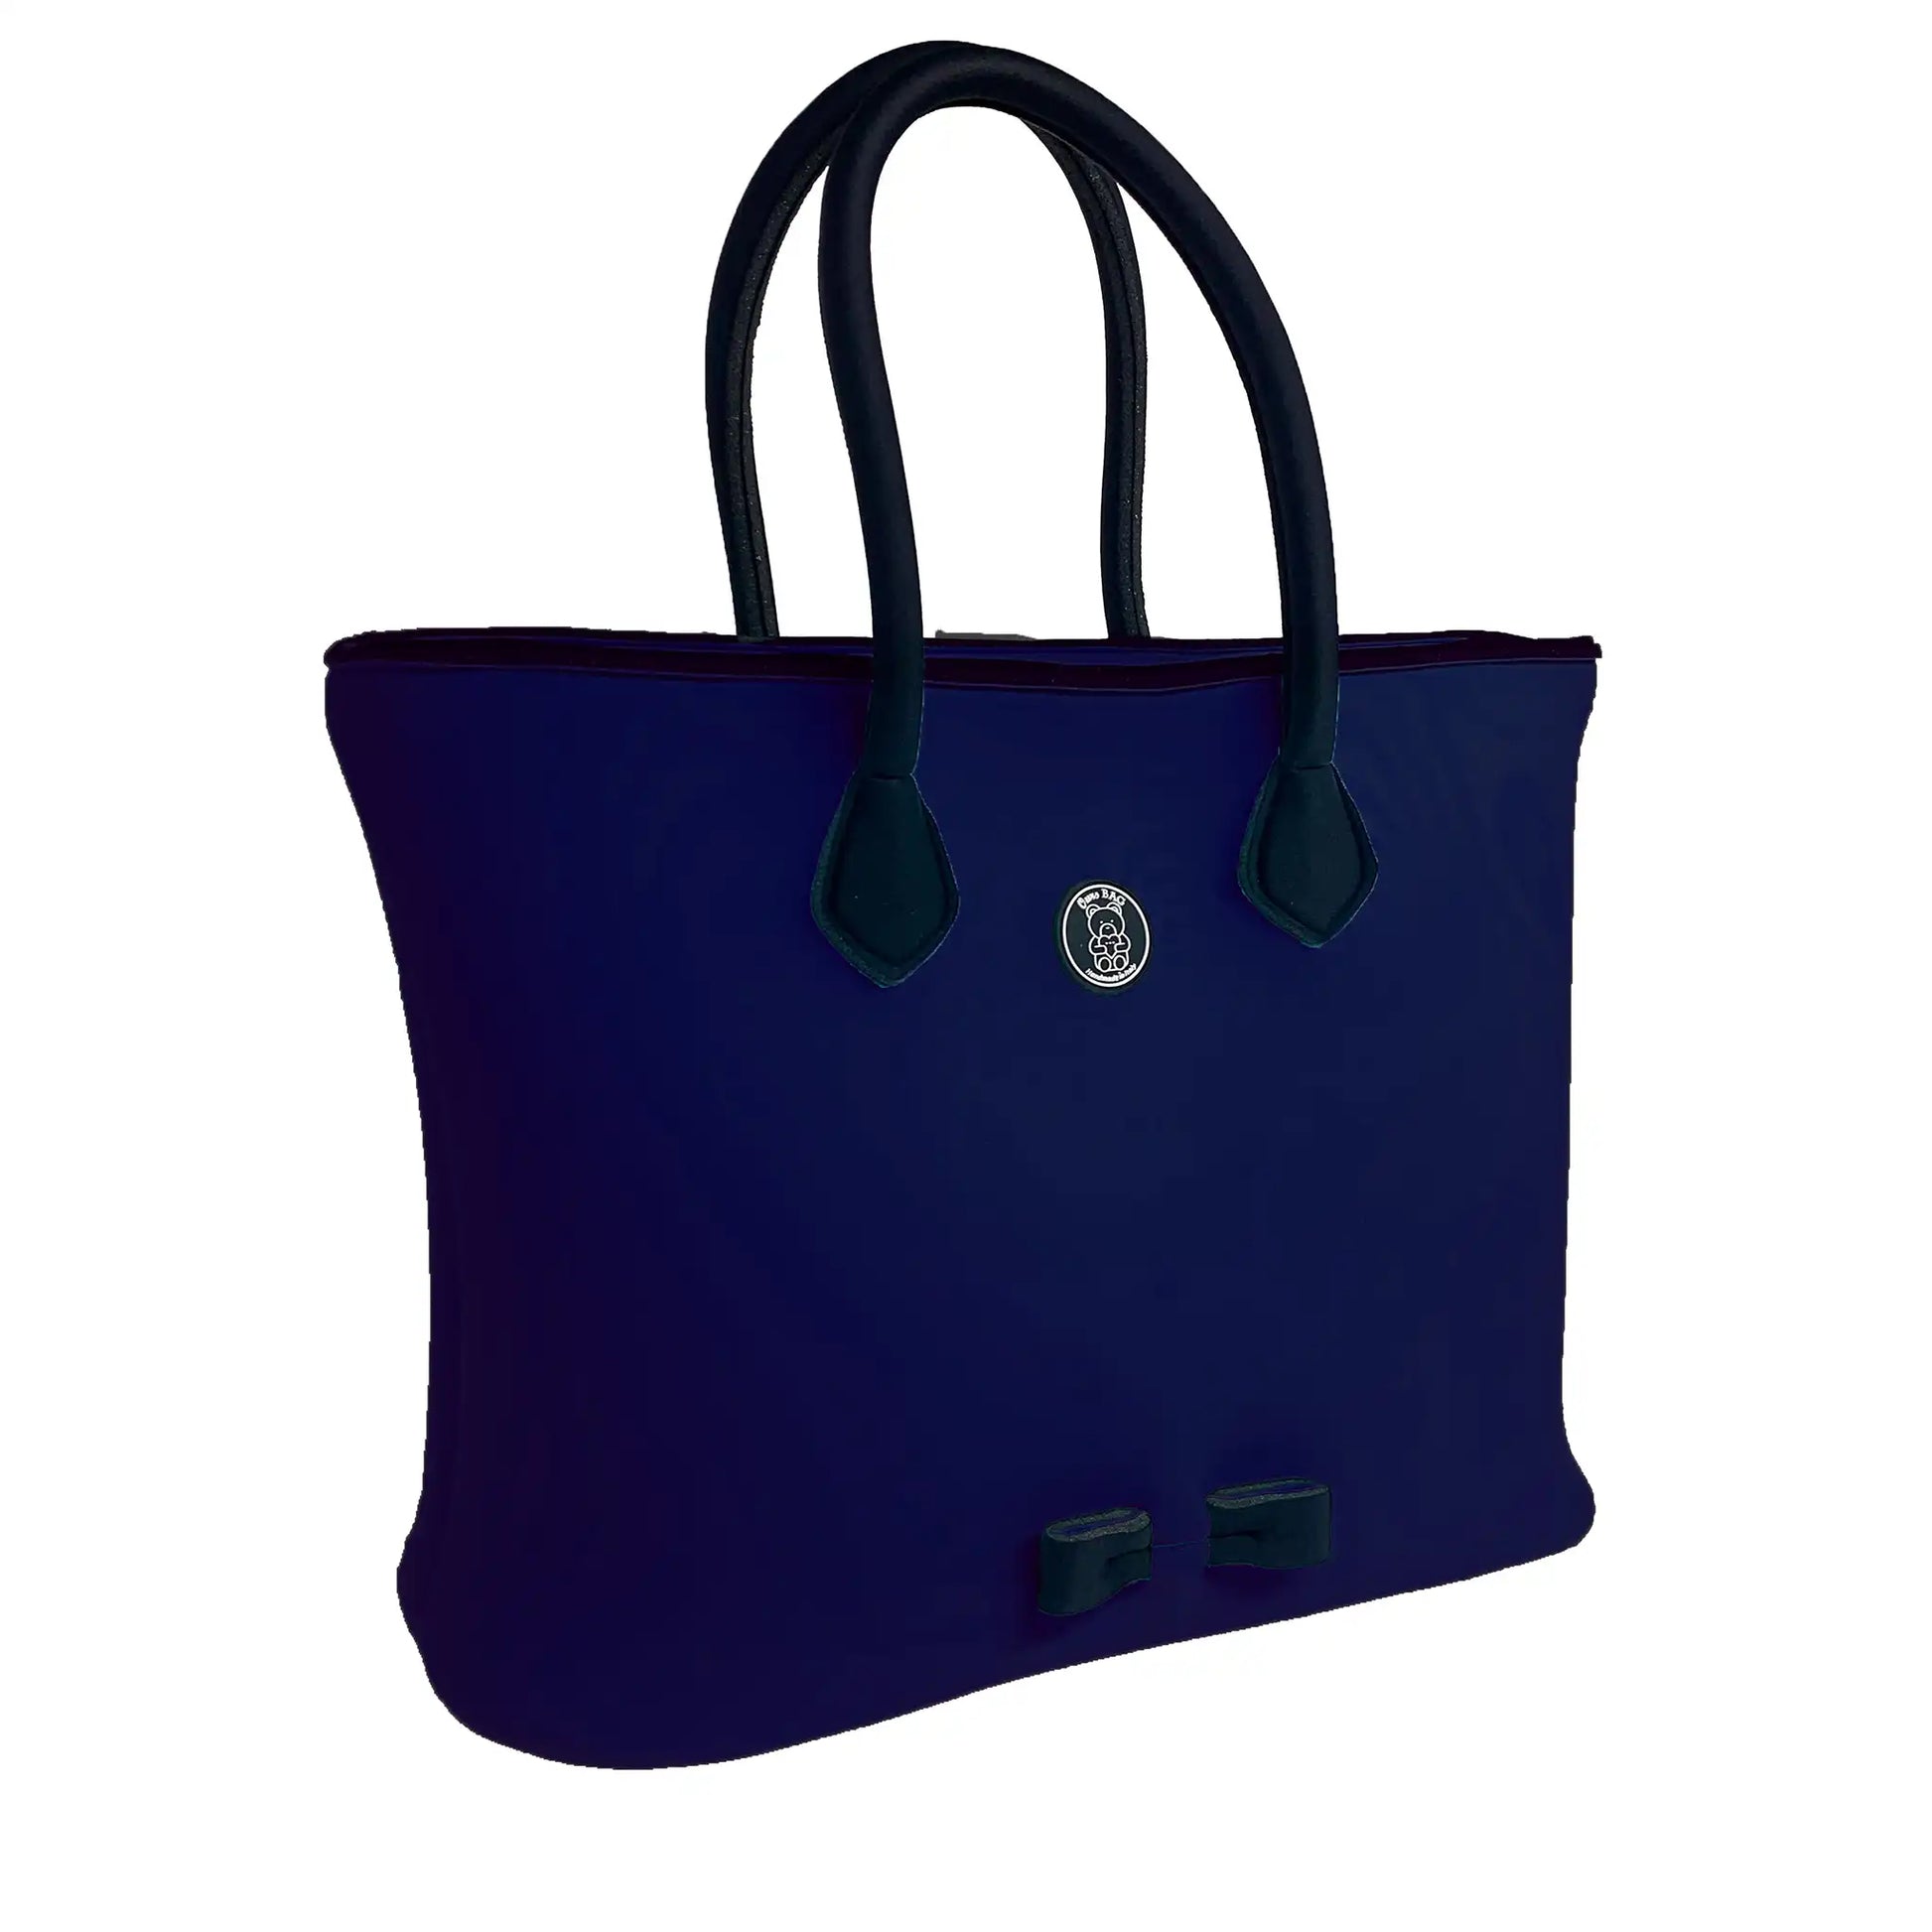 Borsa Shopping con Maniglie Blue | Ours Bag